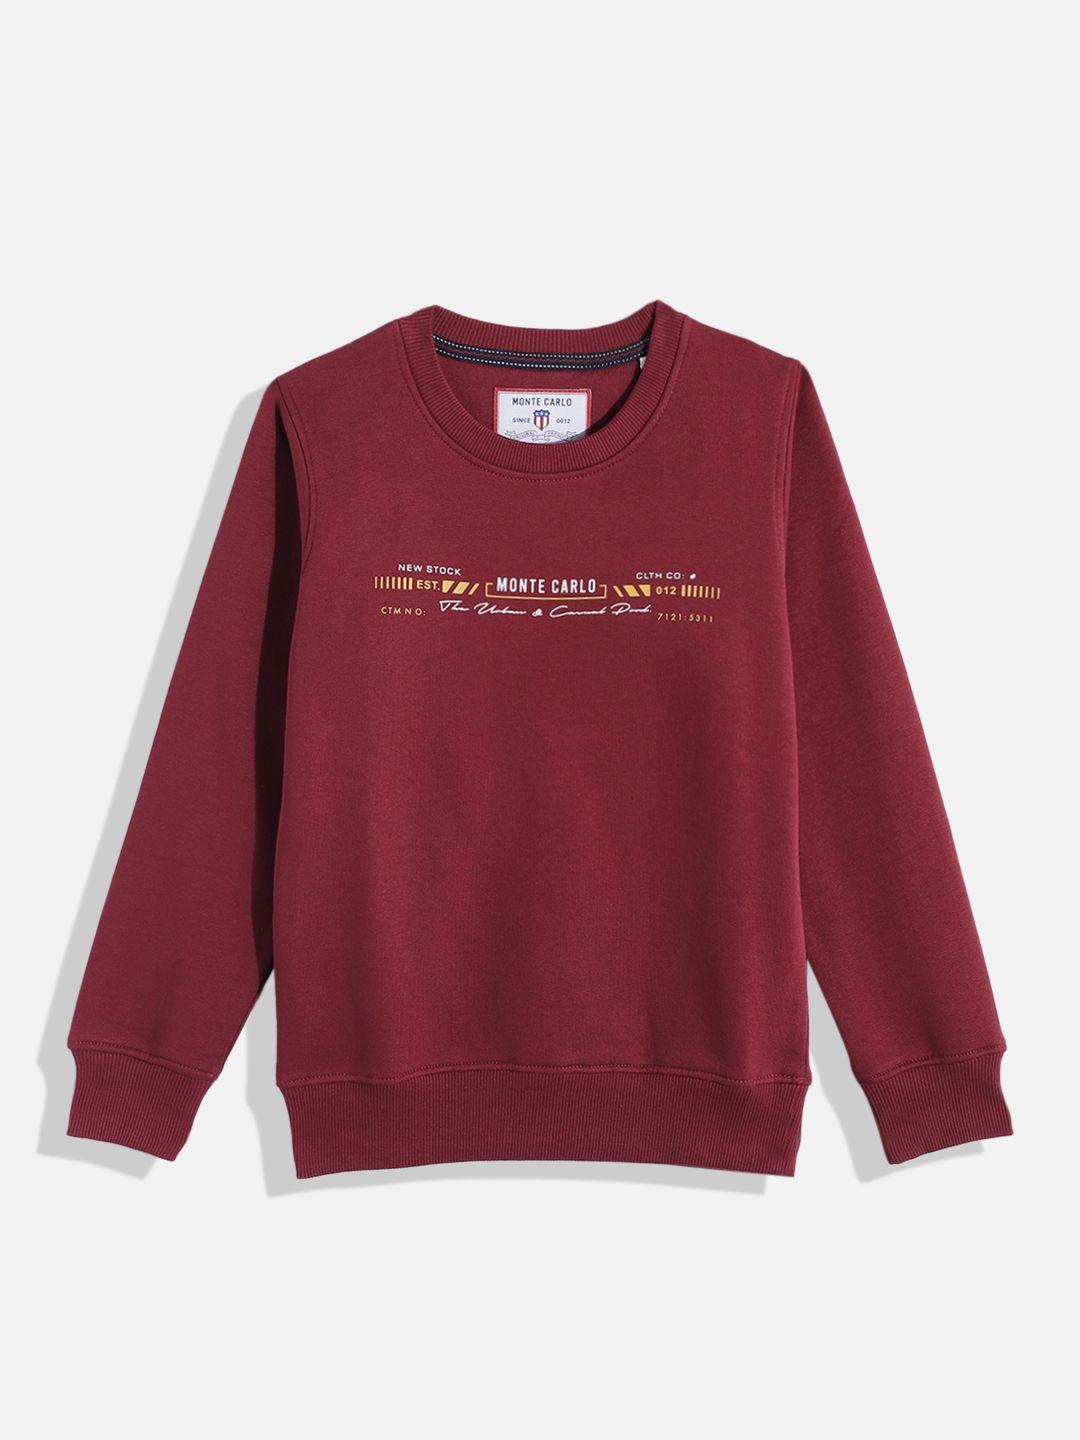 monte carlo boys printed sweatshirt